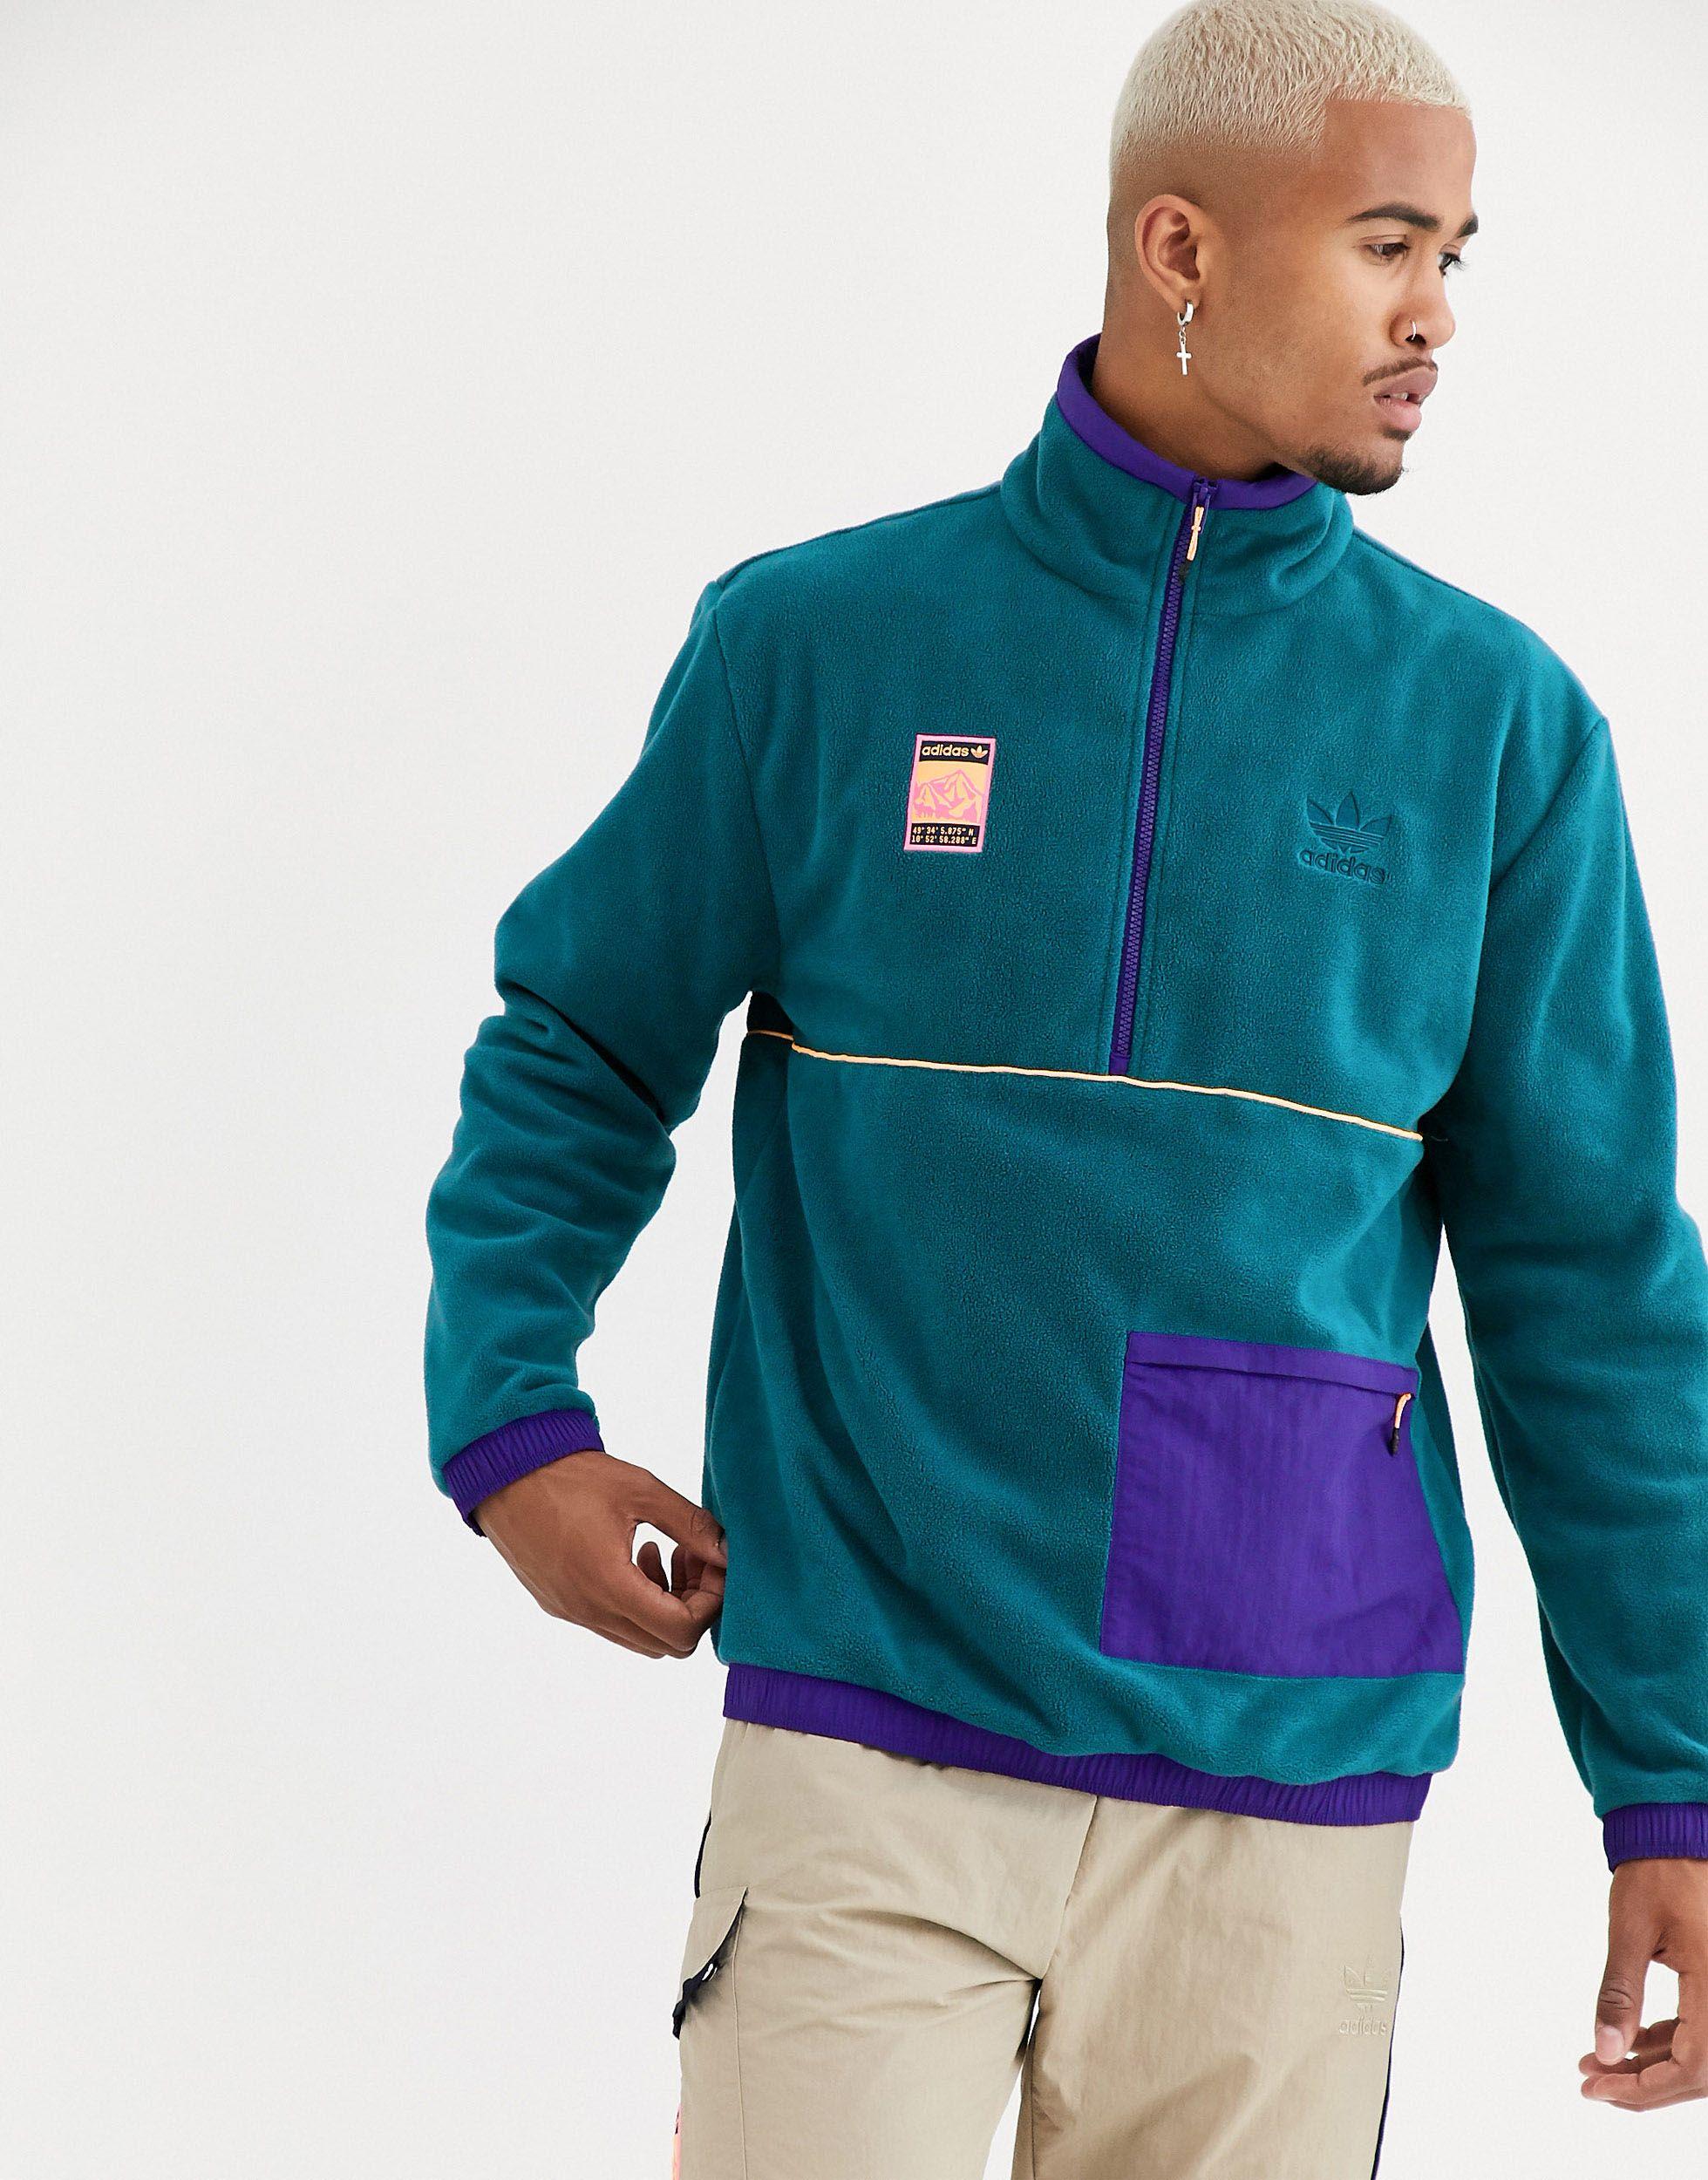 adidas Originals Adiplore Polar Fleece Jacket in Purple for Men - Lyst